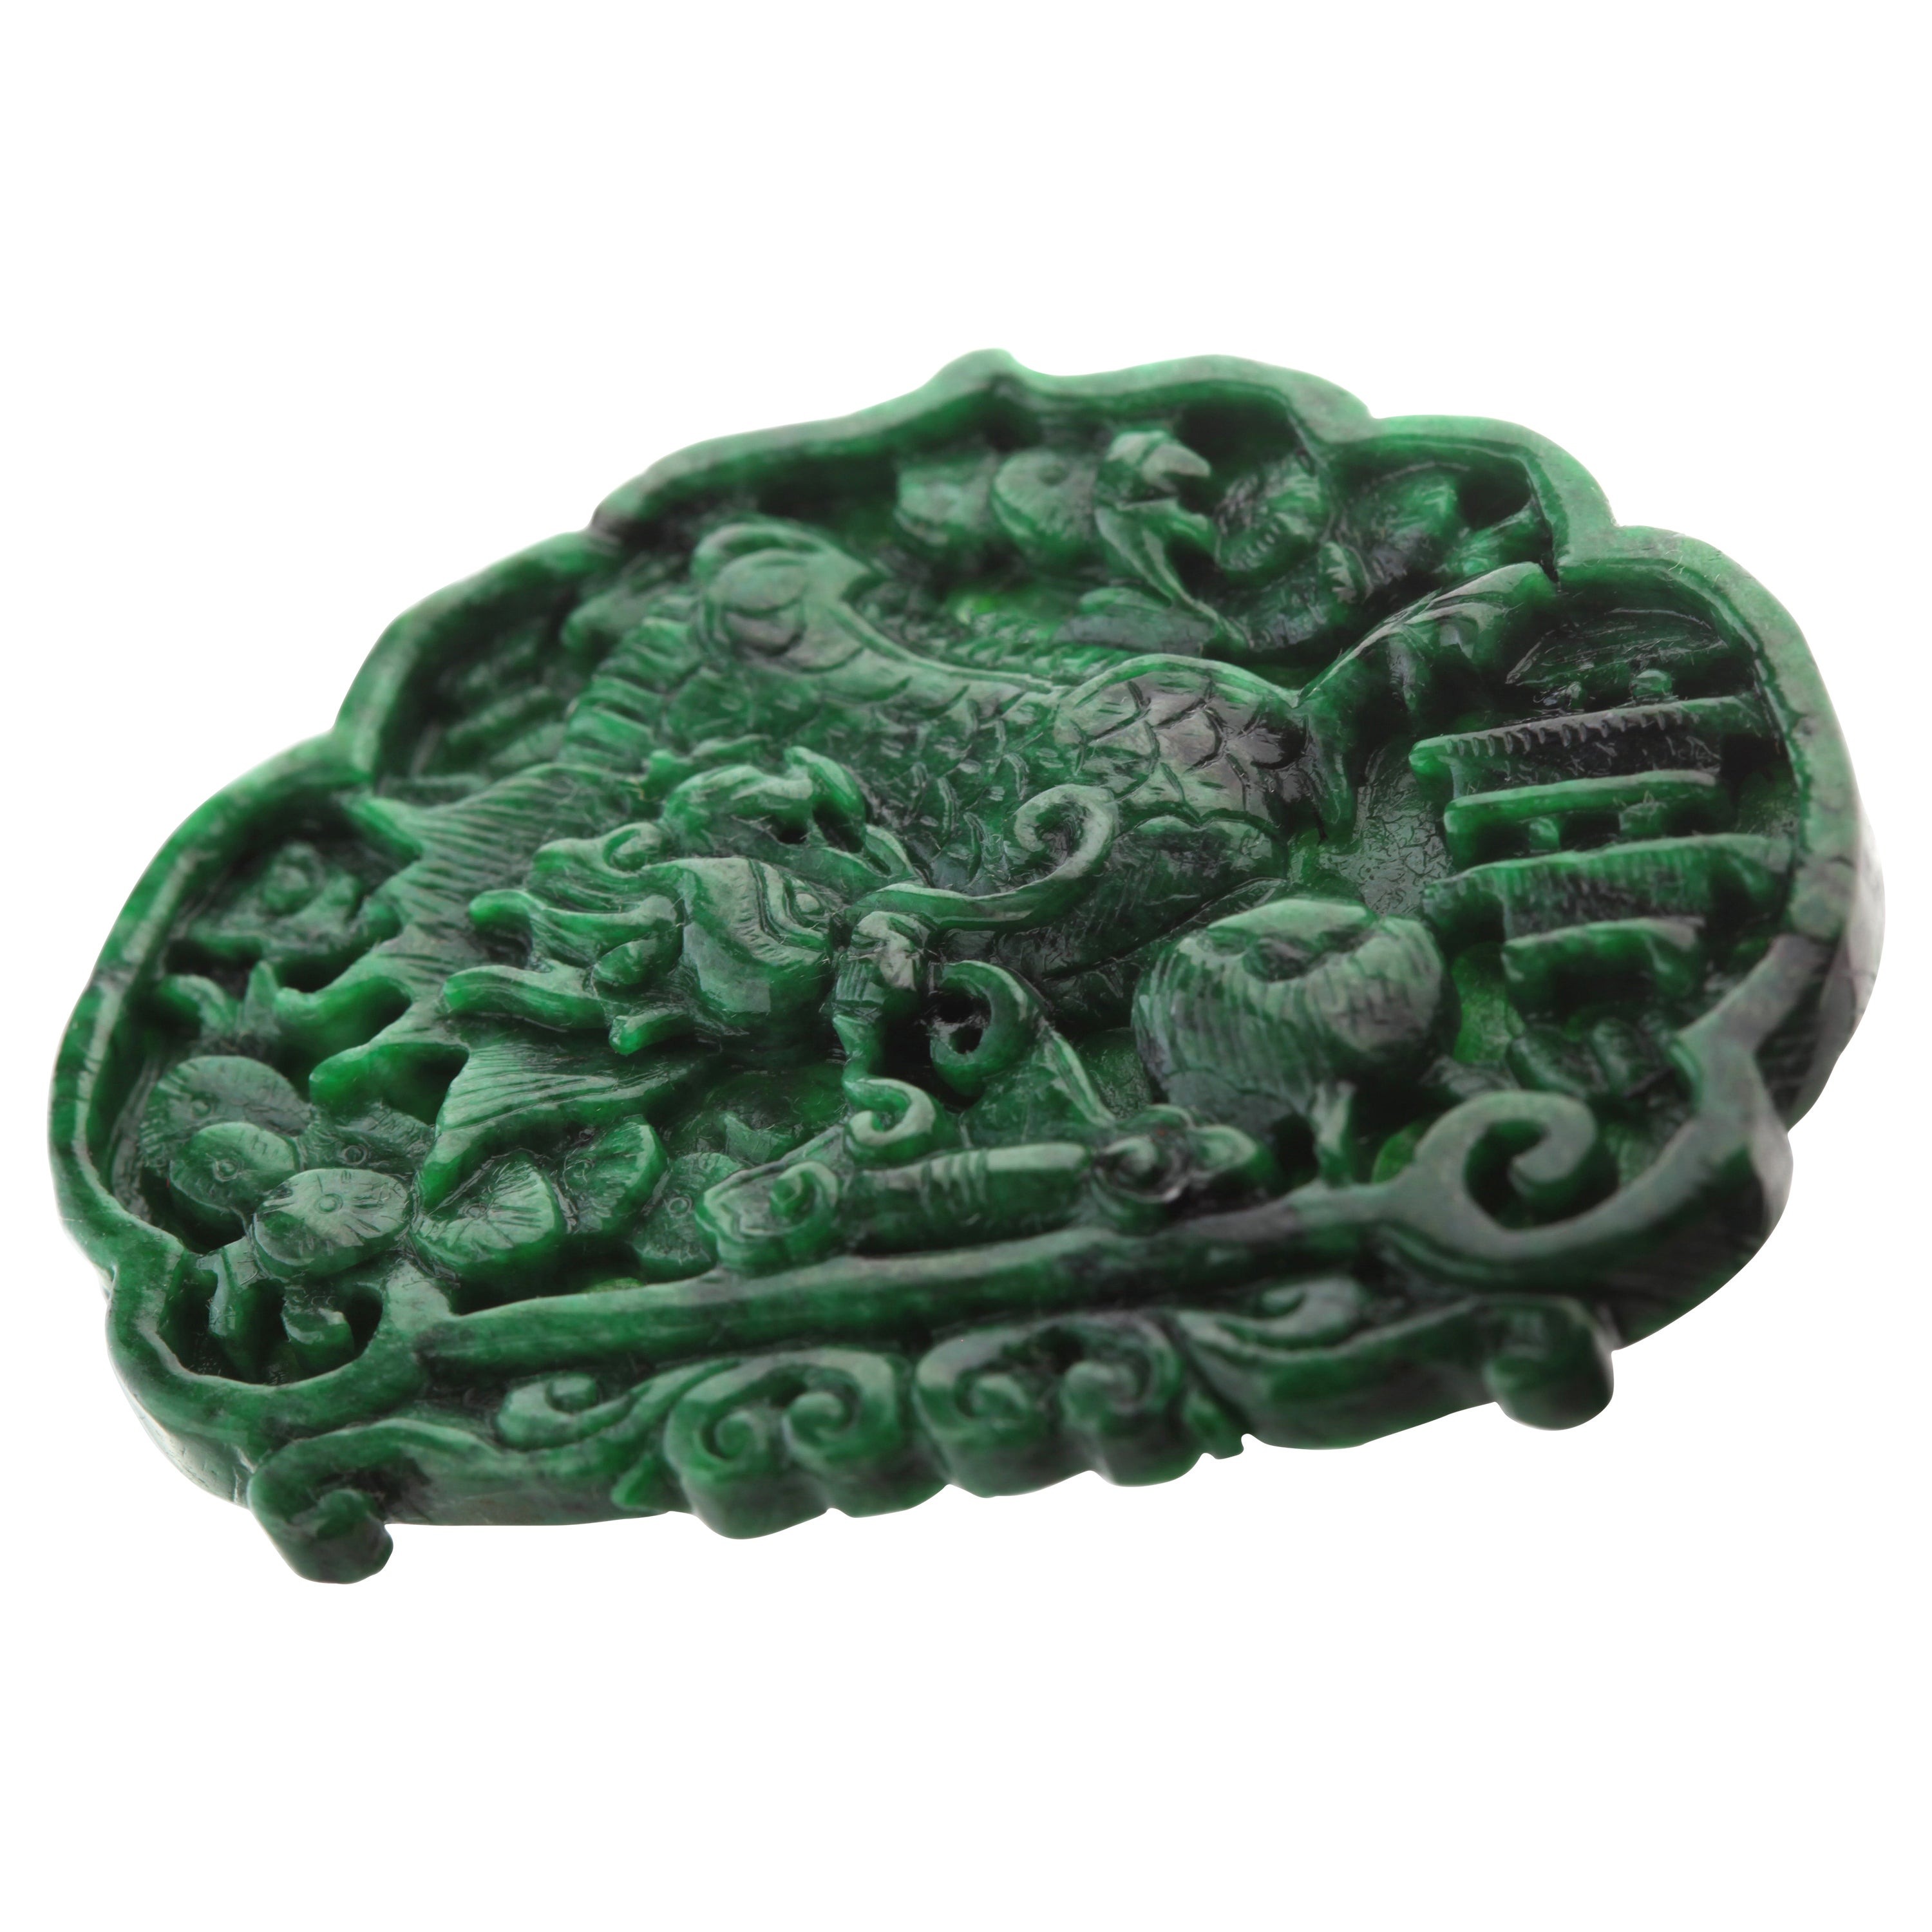 Carved Pendant Omphacite Jade Natural Jadeite Asian Art Dragon Figurine Statue